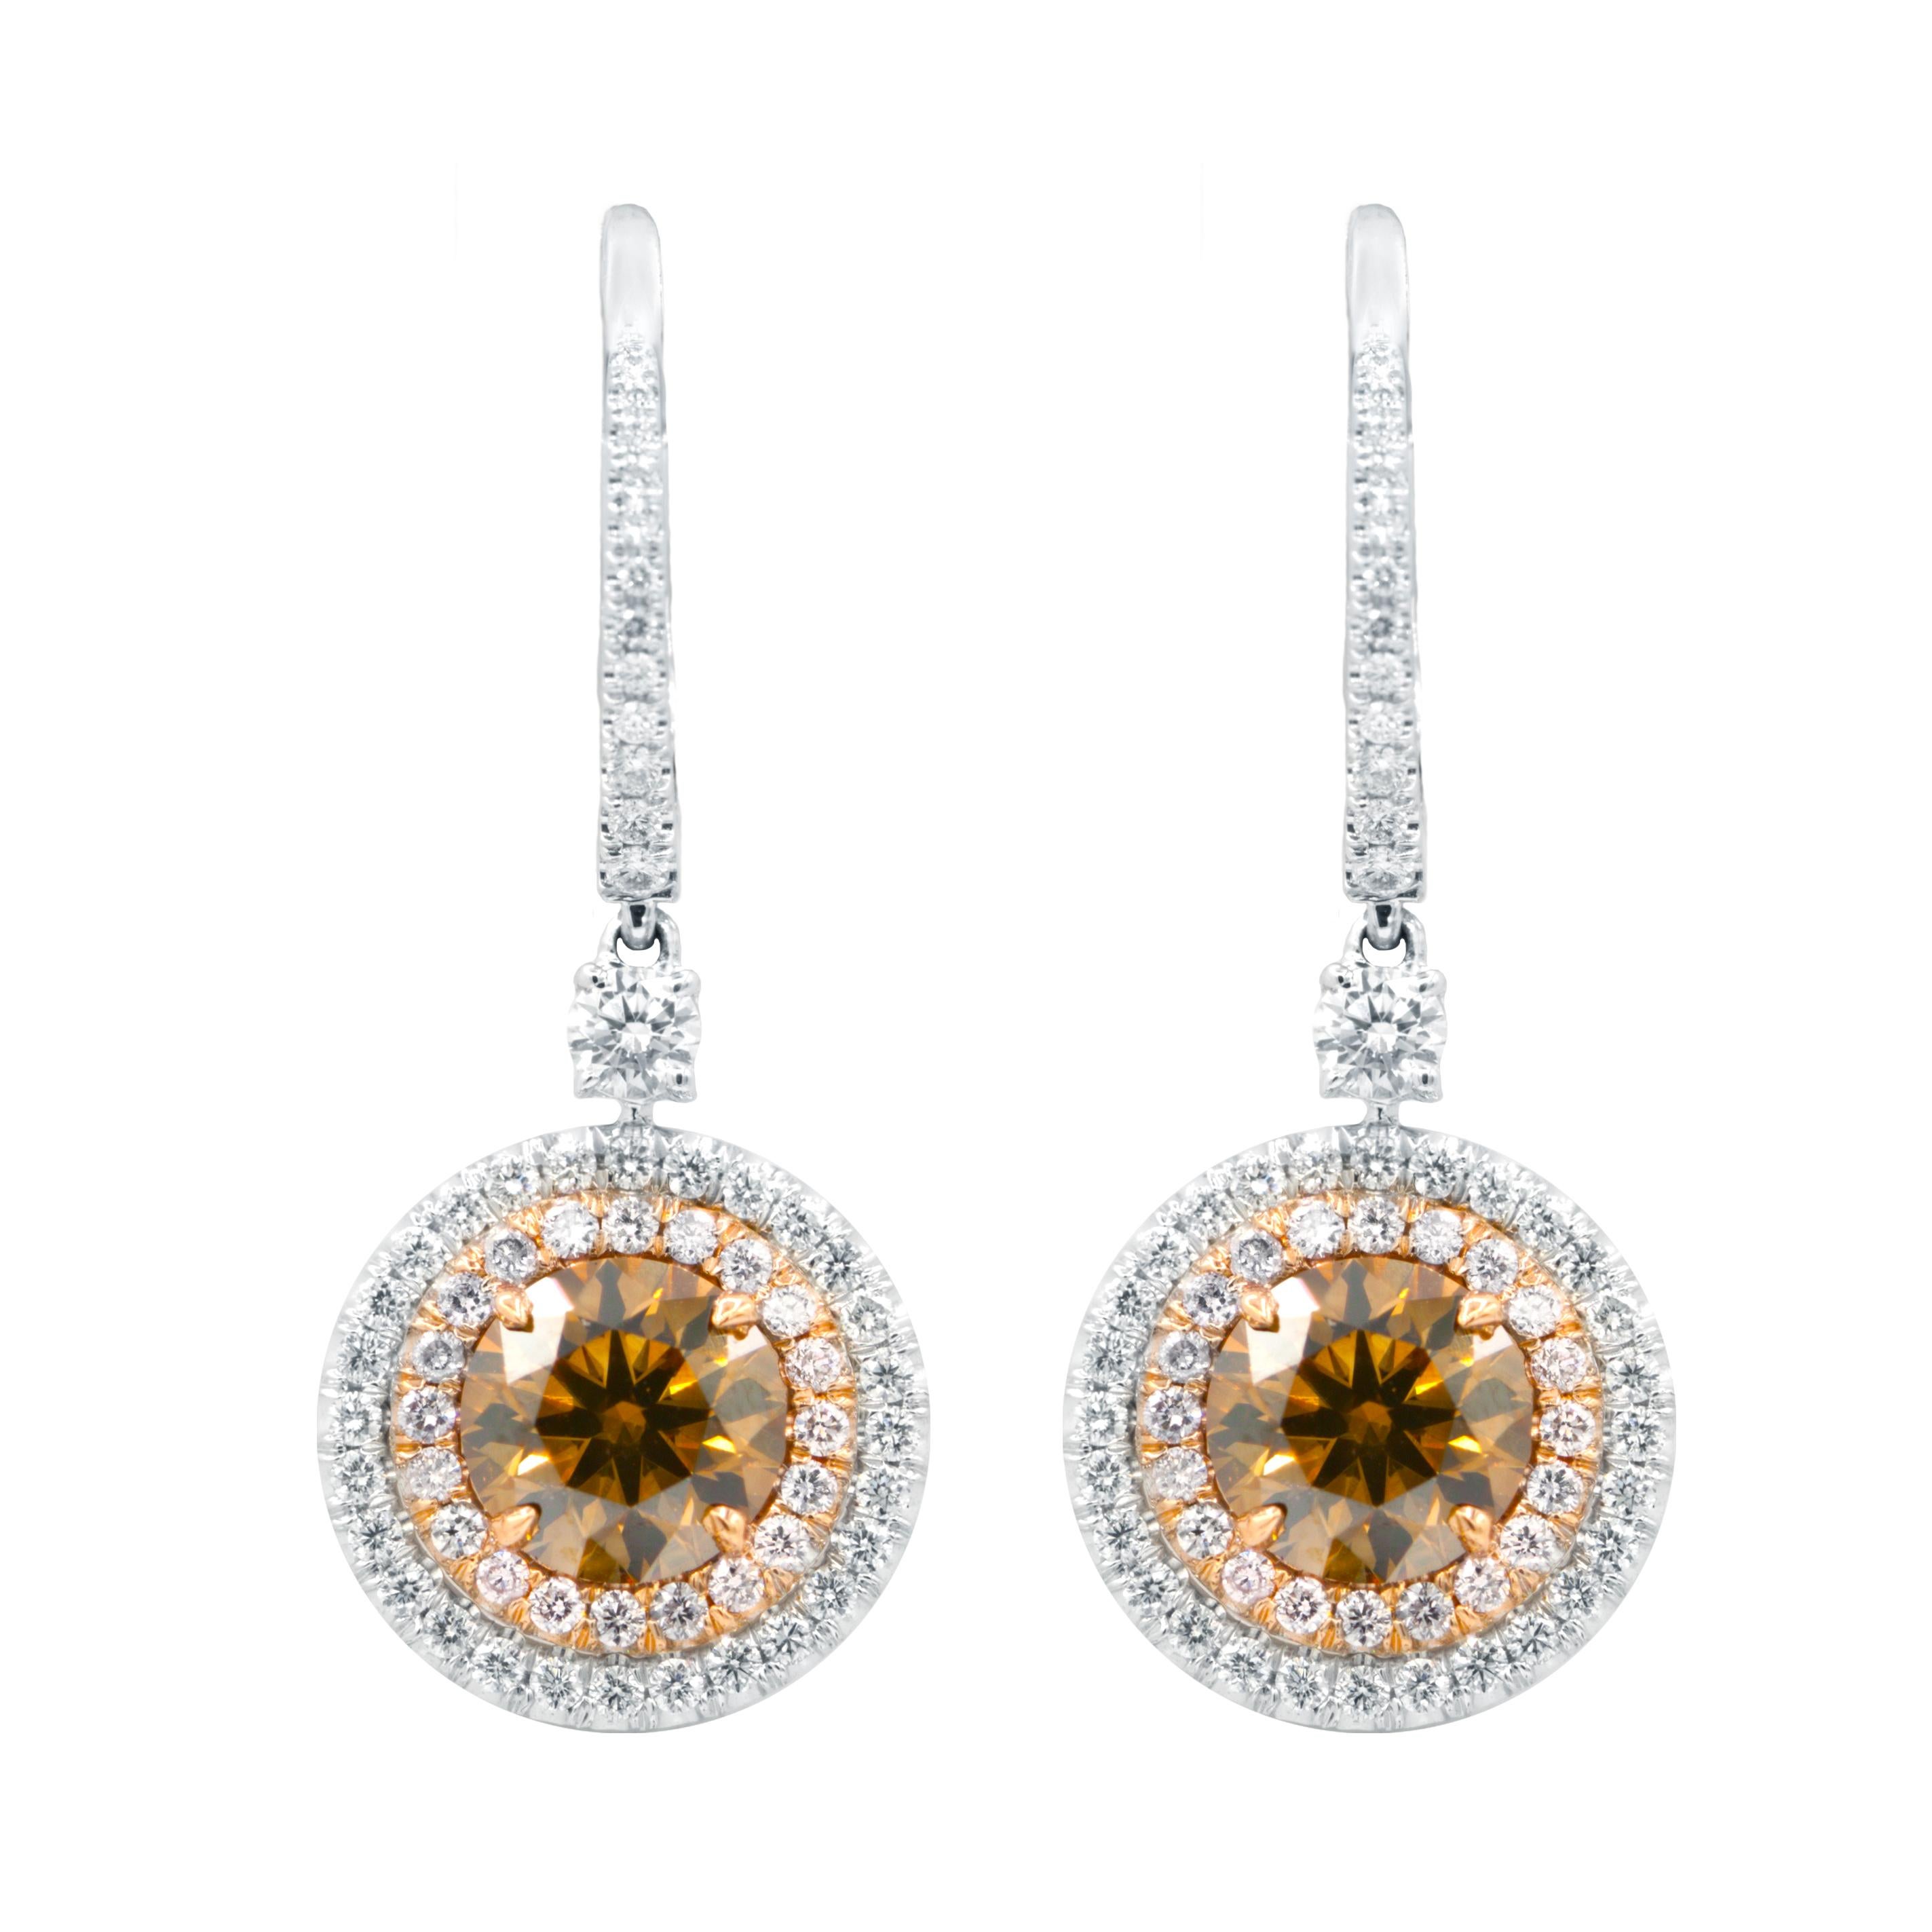 Diana m. fine jewelry 18k two-tone 4.02 ct. tw. diamond earrings
